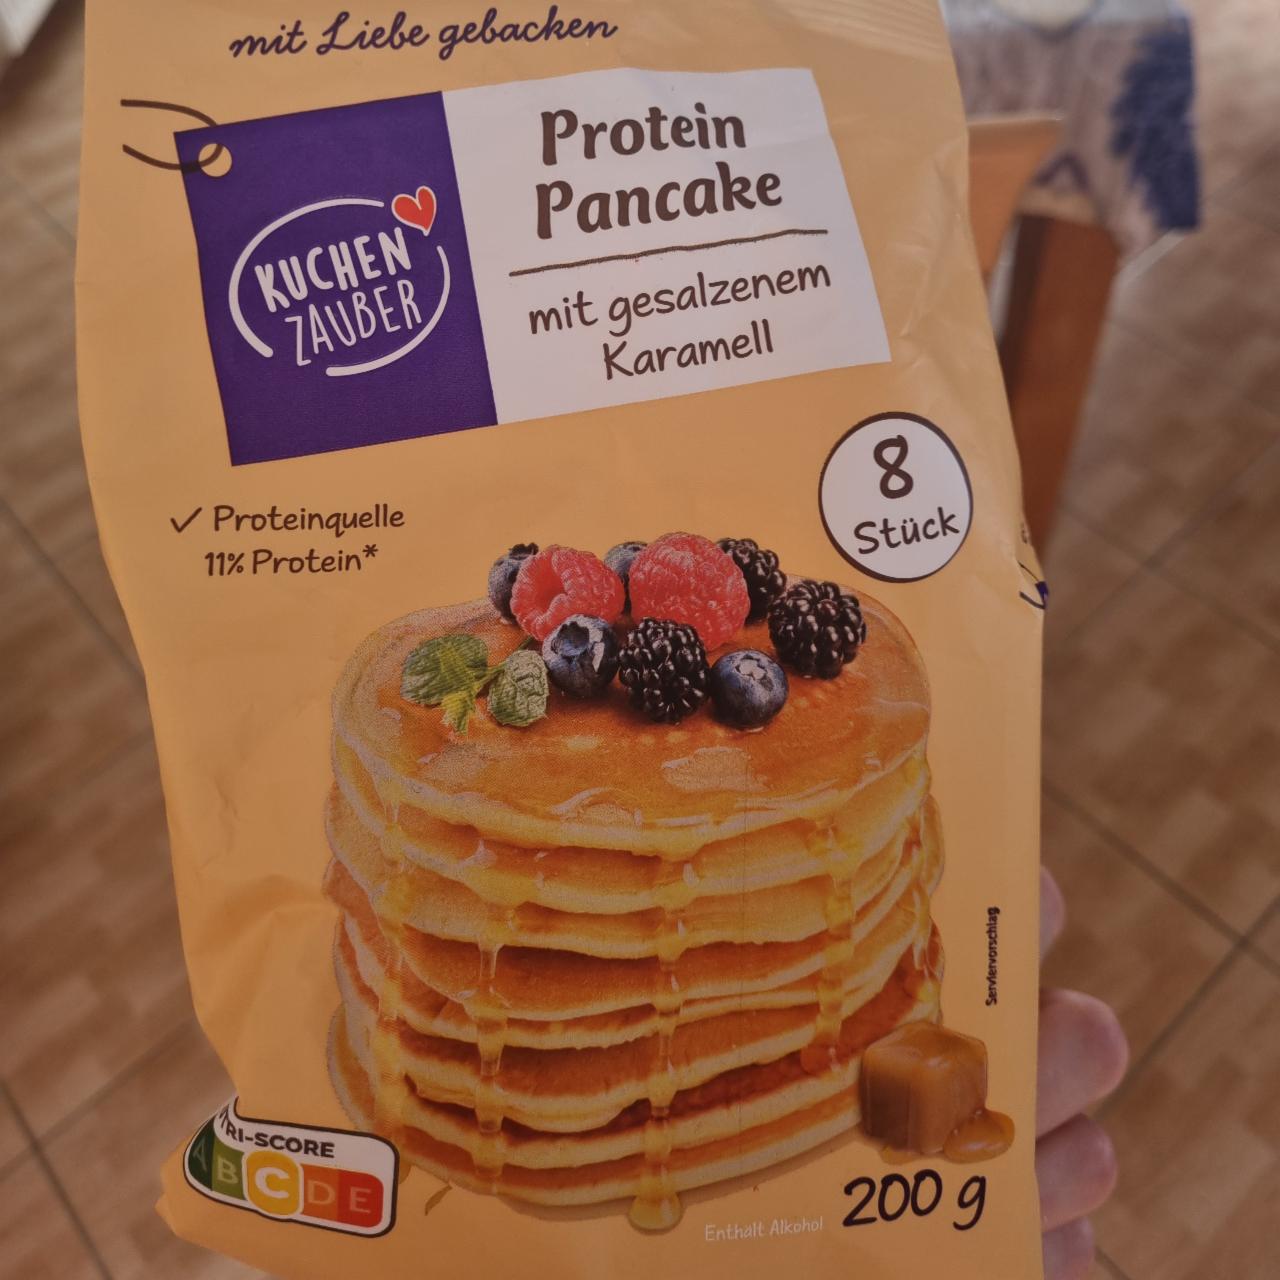 Fotografie - Protein Pancake mit gesalzenem Karamell Kuchen Zauber